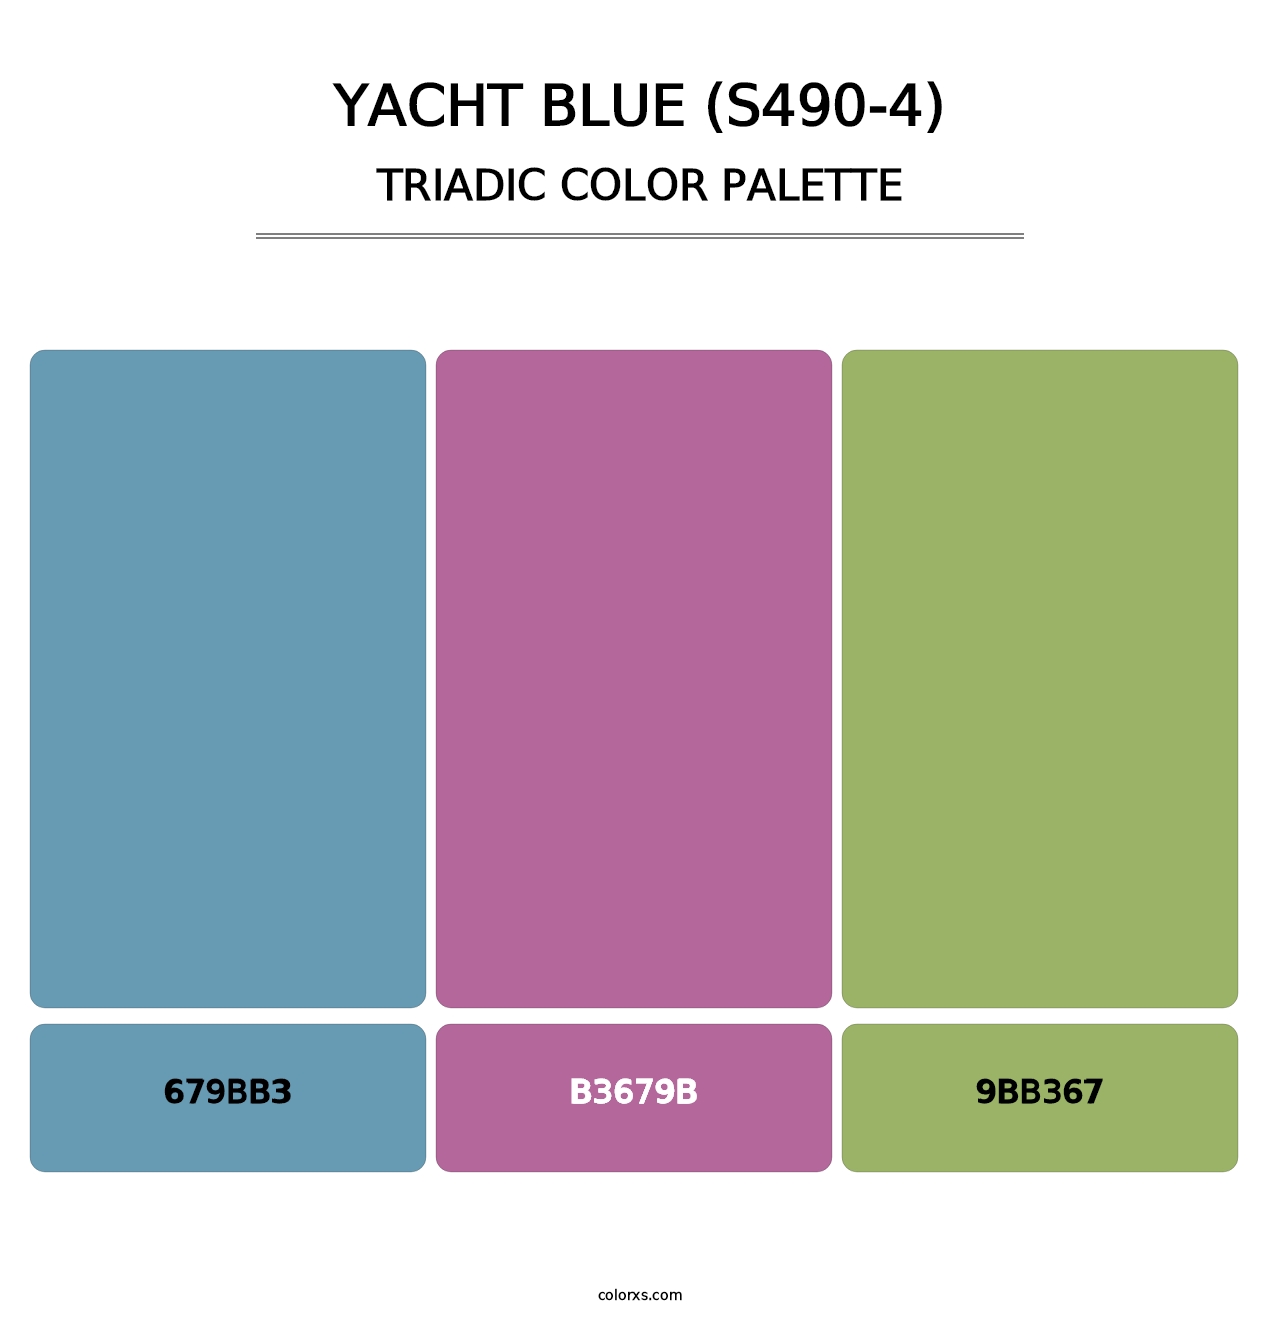 Yacht Blue (S490-4) - Triadic Color Palette